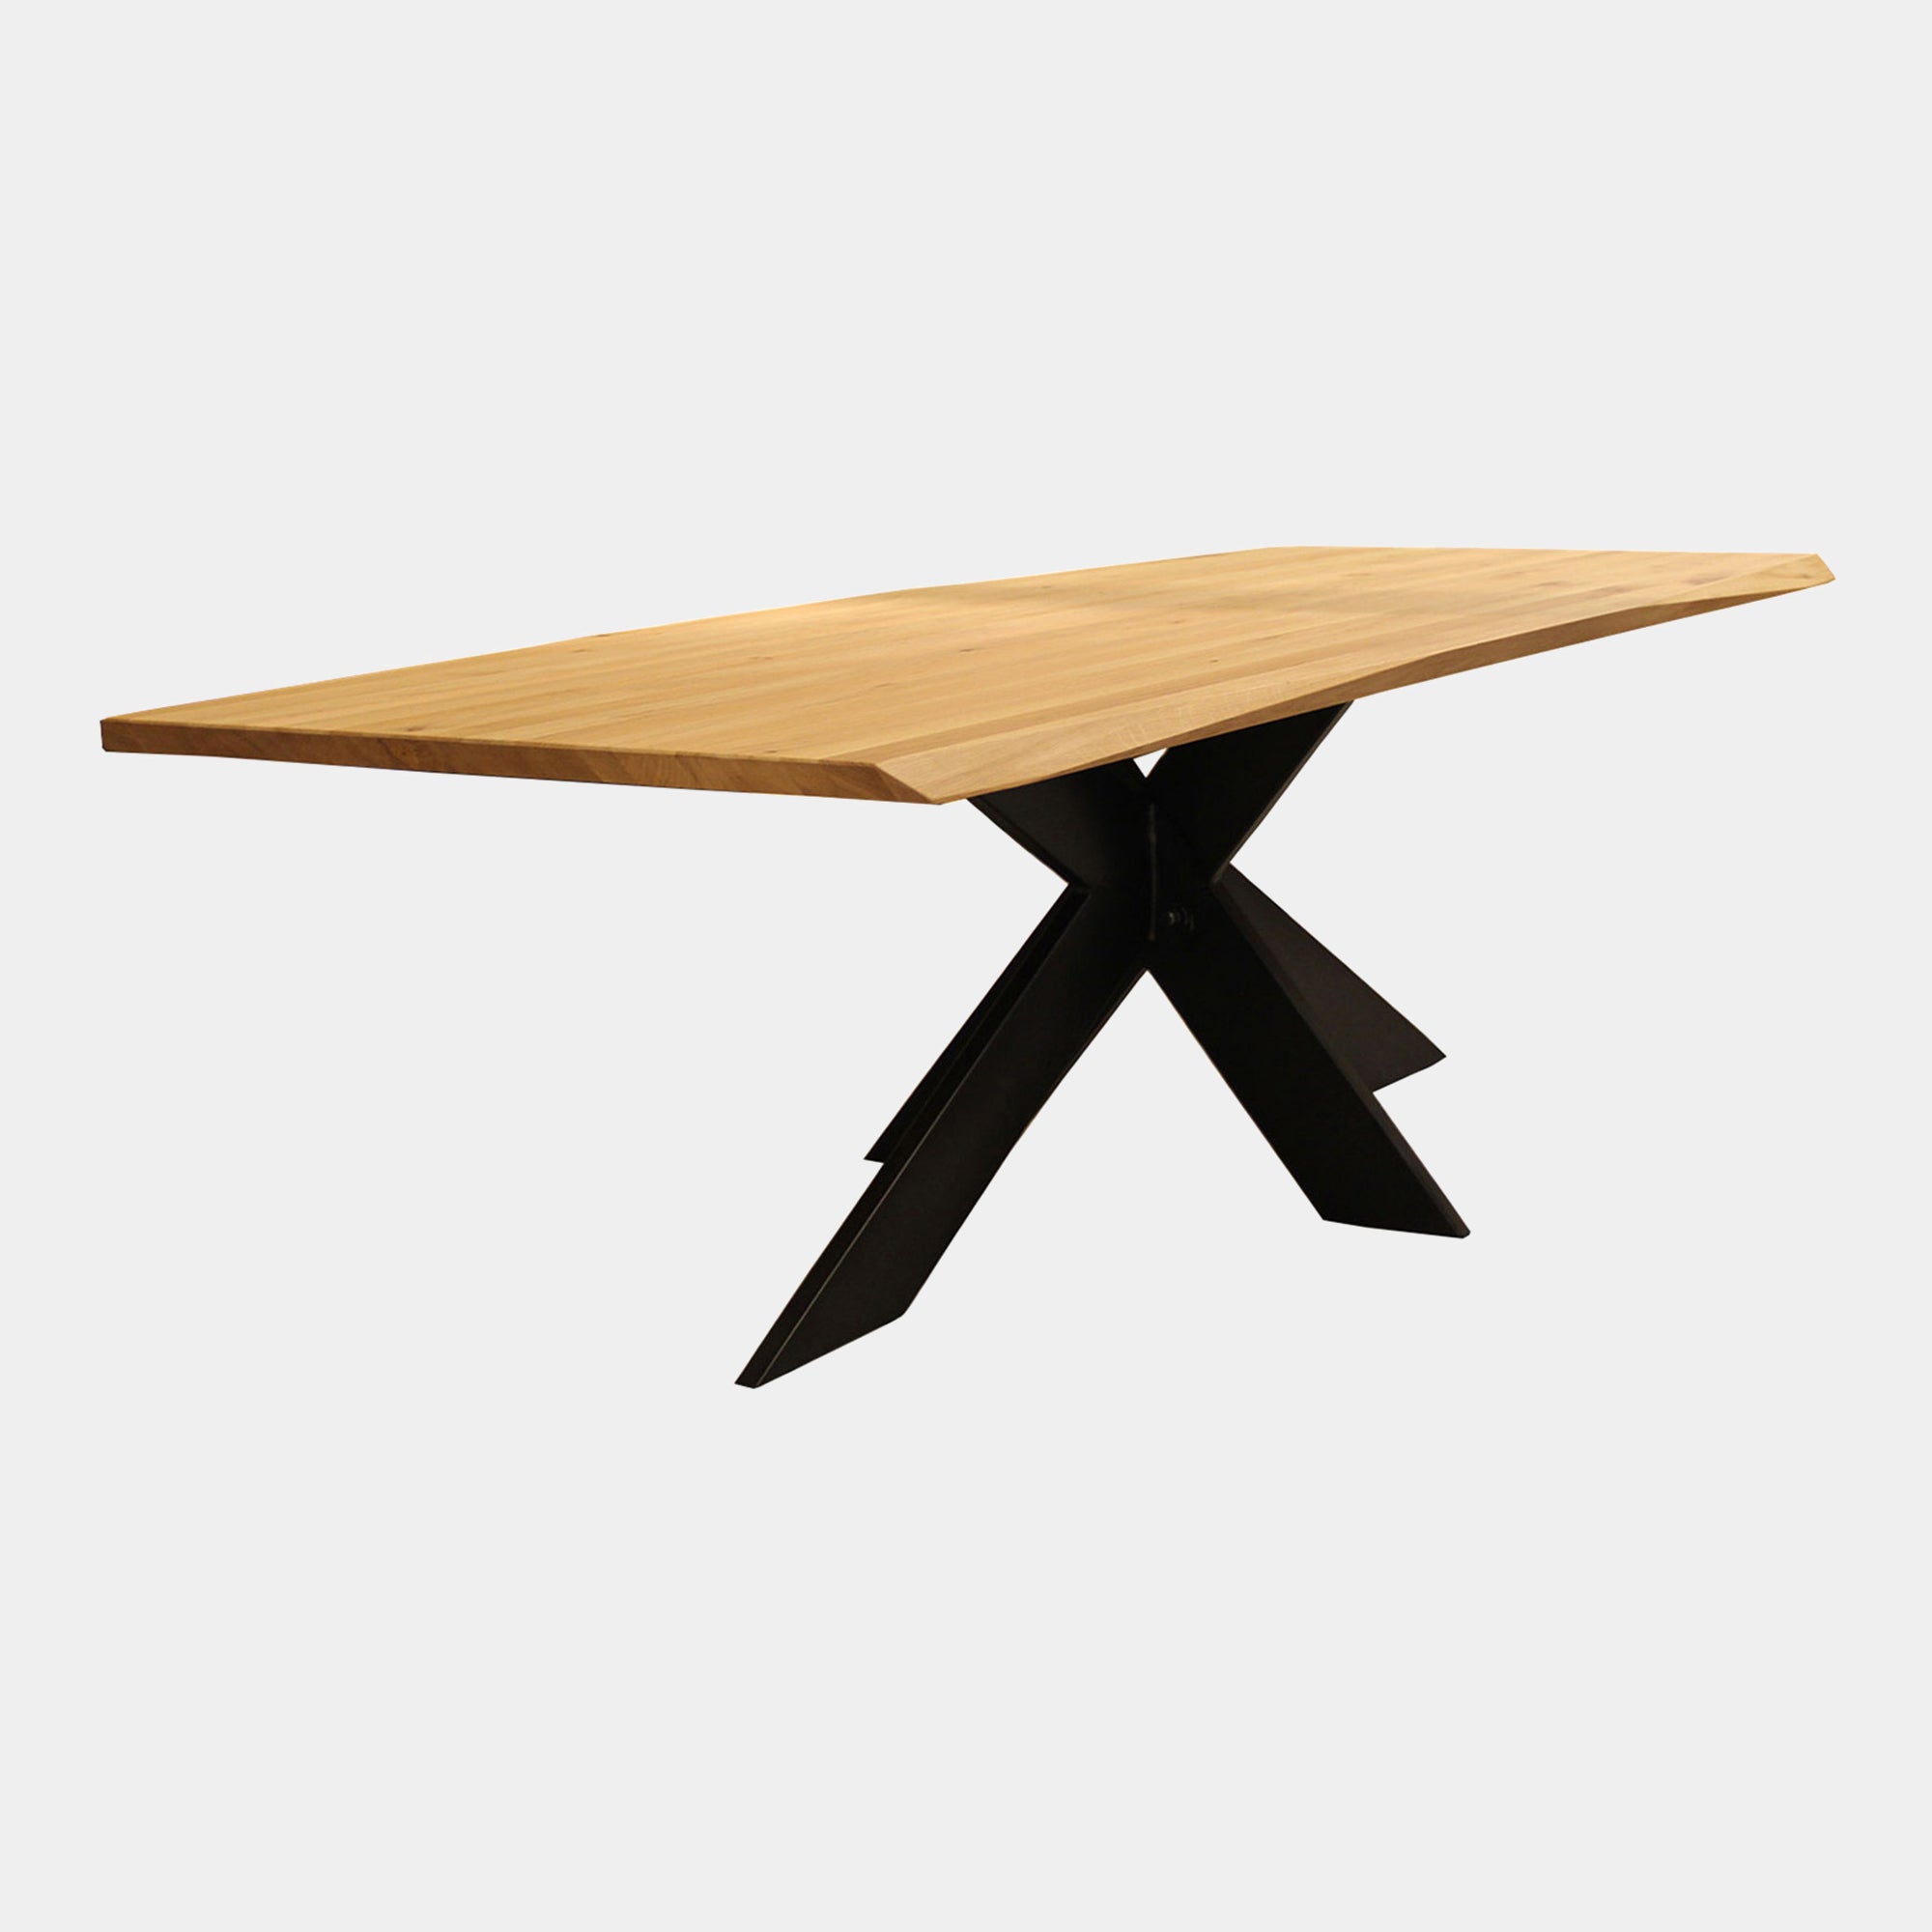 Excalibur - Dining Table Extreme Edge Denver Leg 260 x 110cm